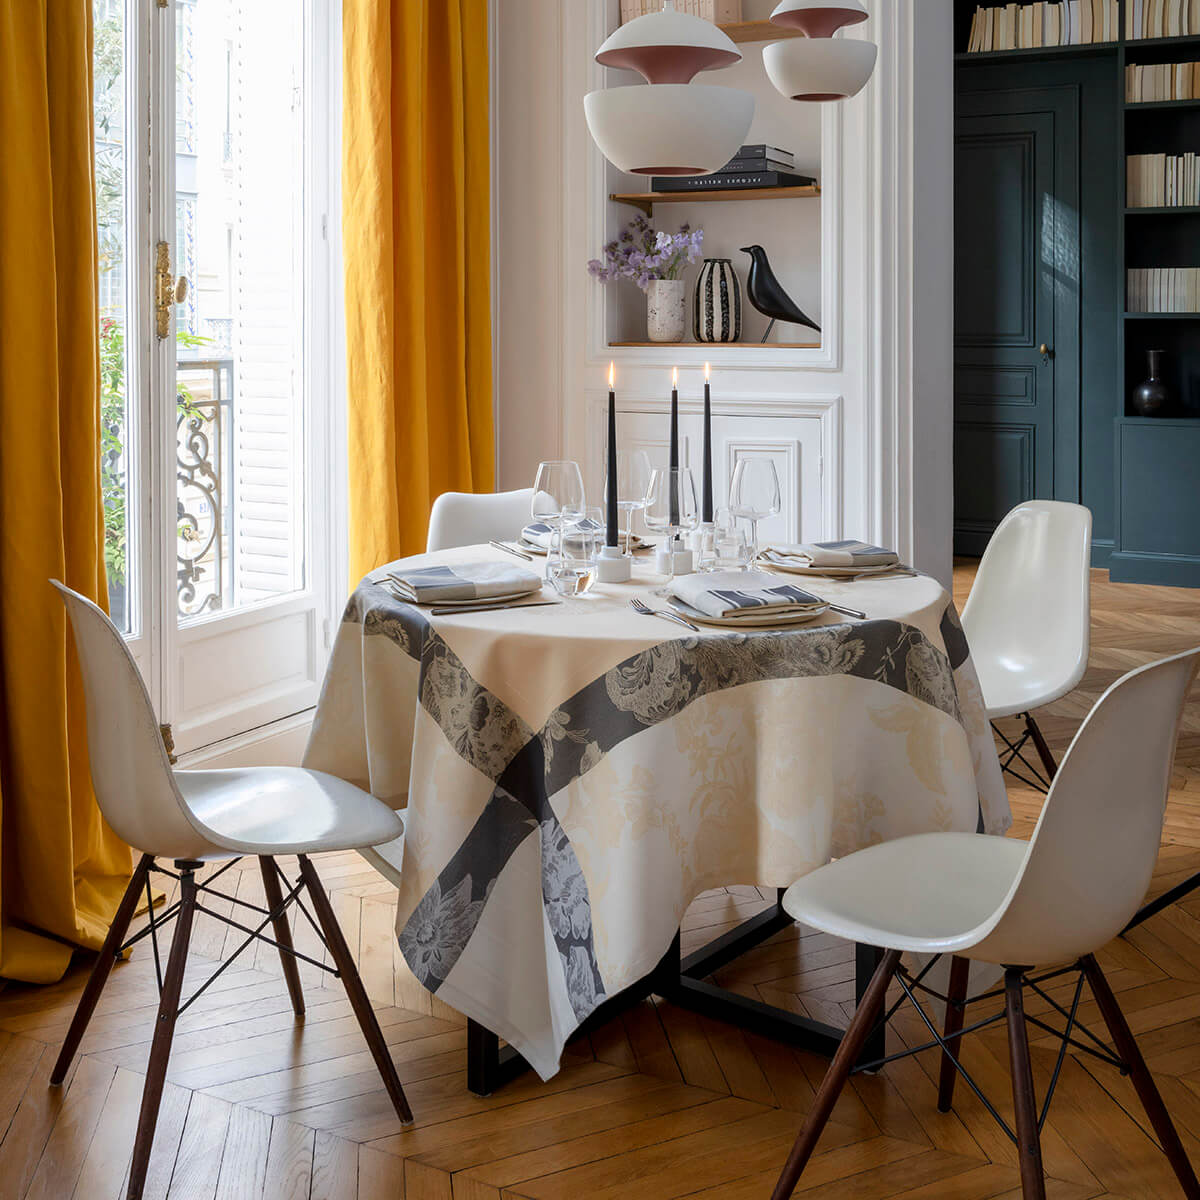 A La Fran쳌aise Yellow Table Linens by Le Jacquard Francais